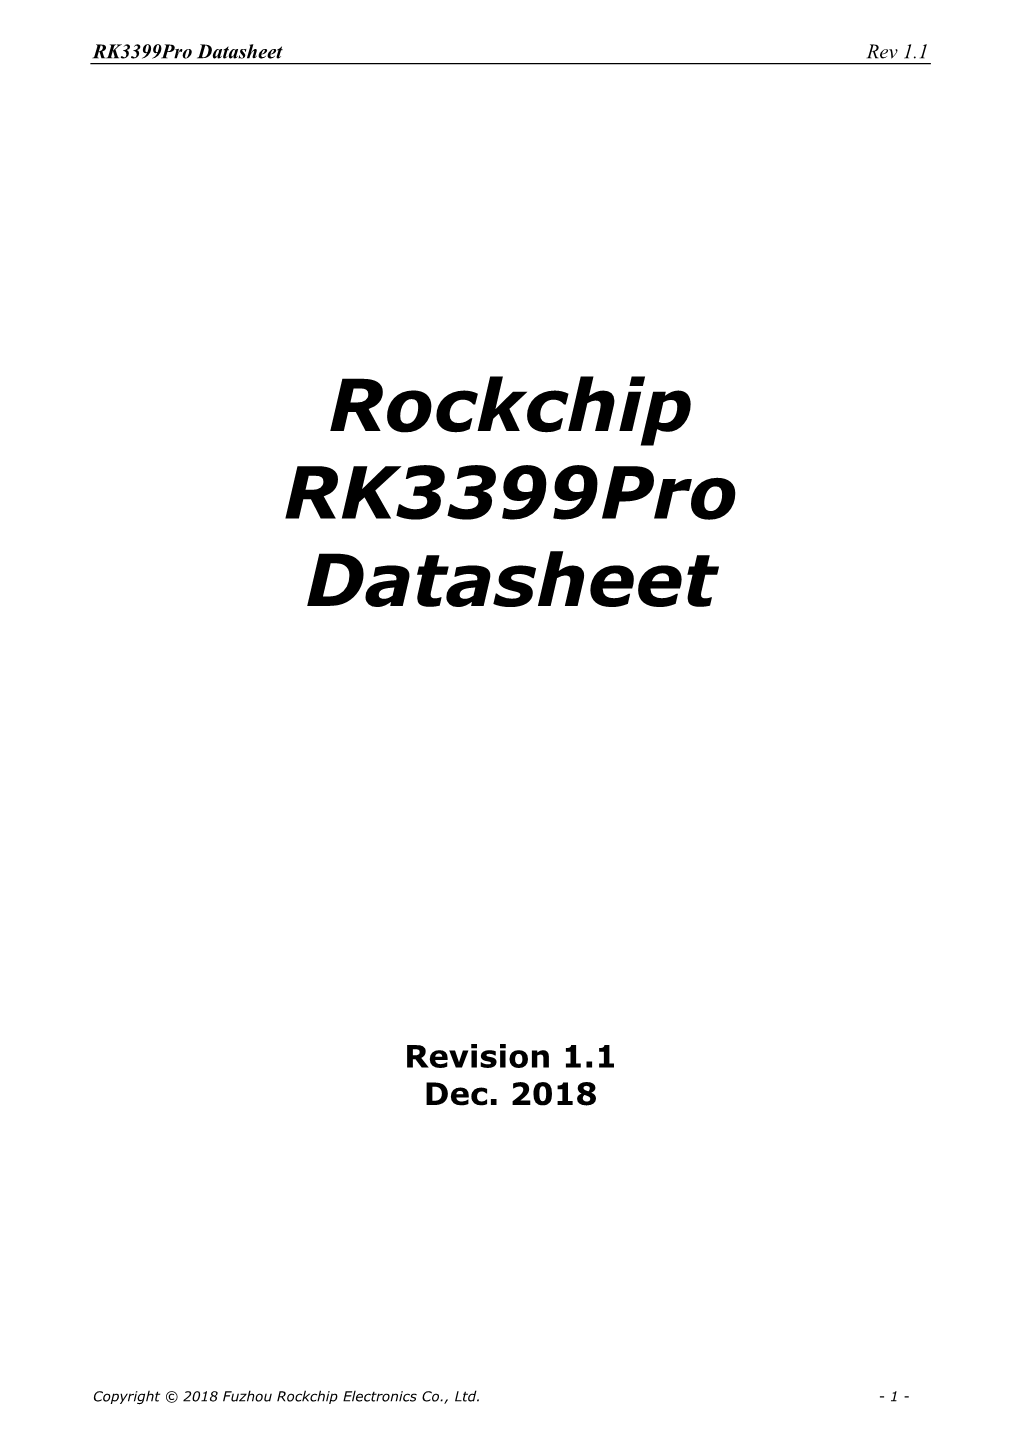 Rockchip Rk3399pro Datasheet